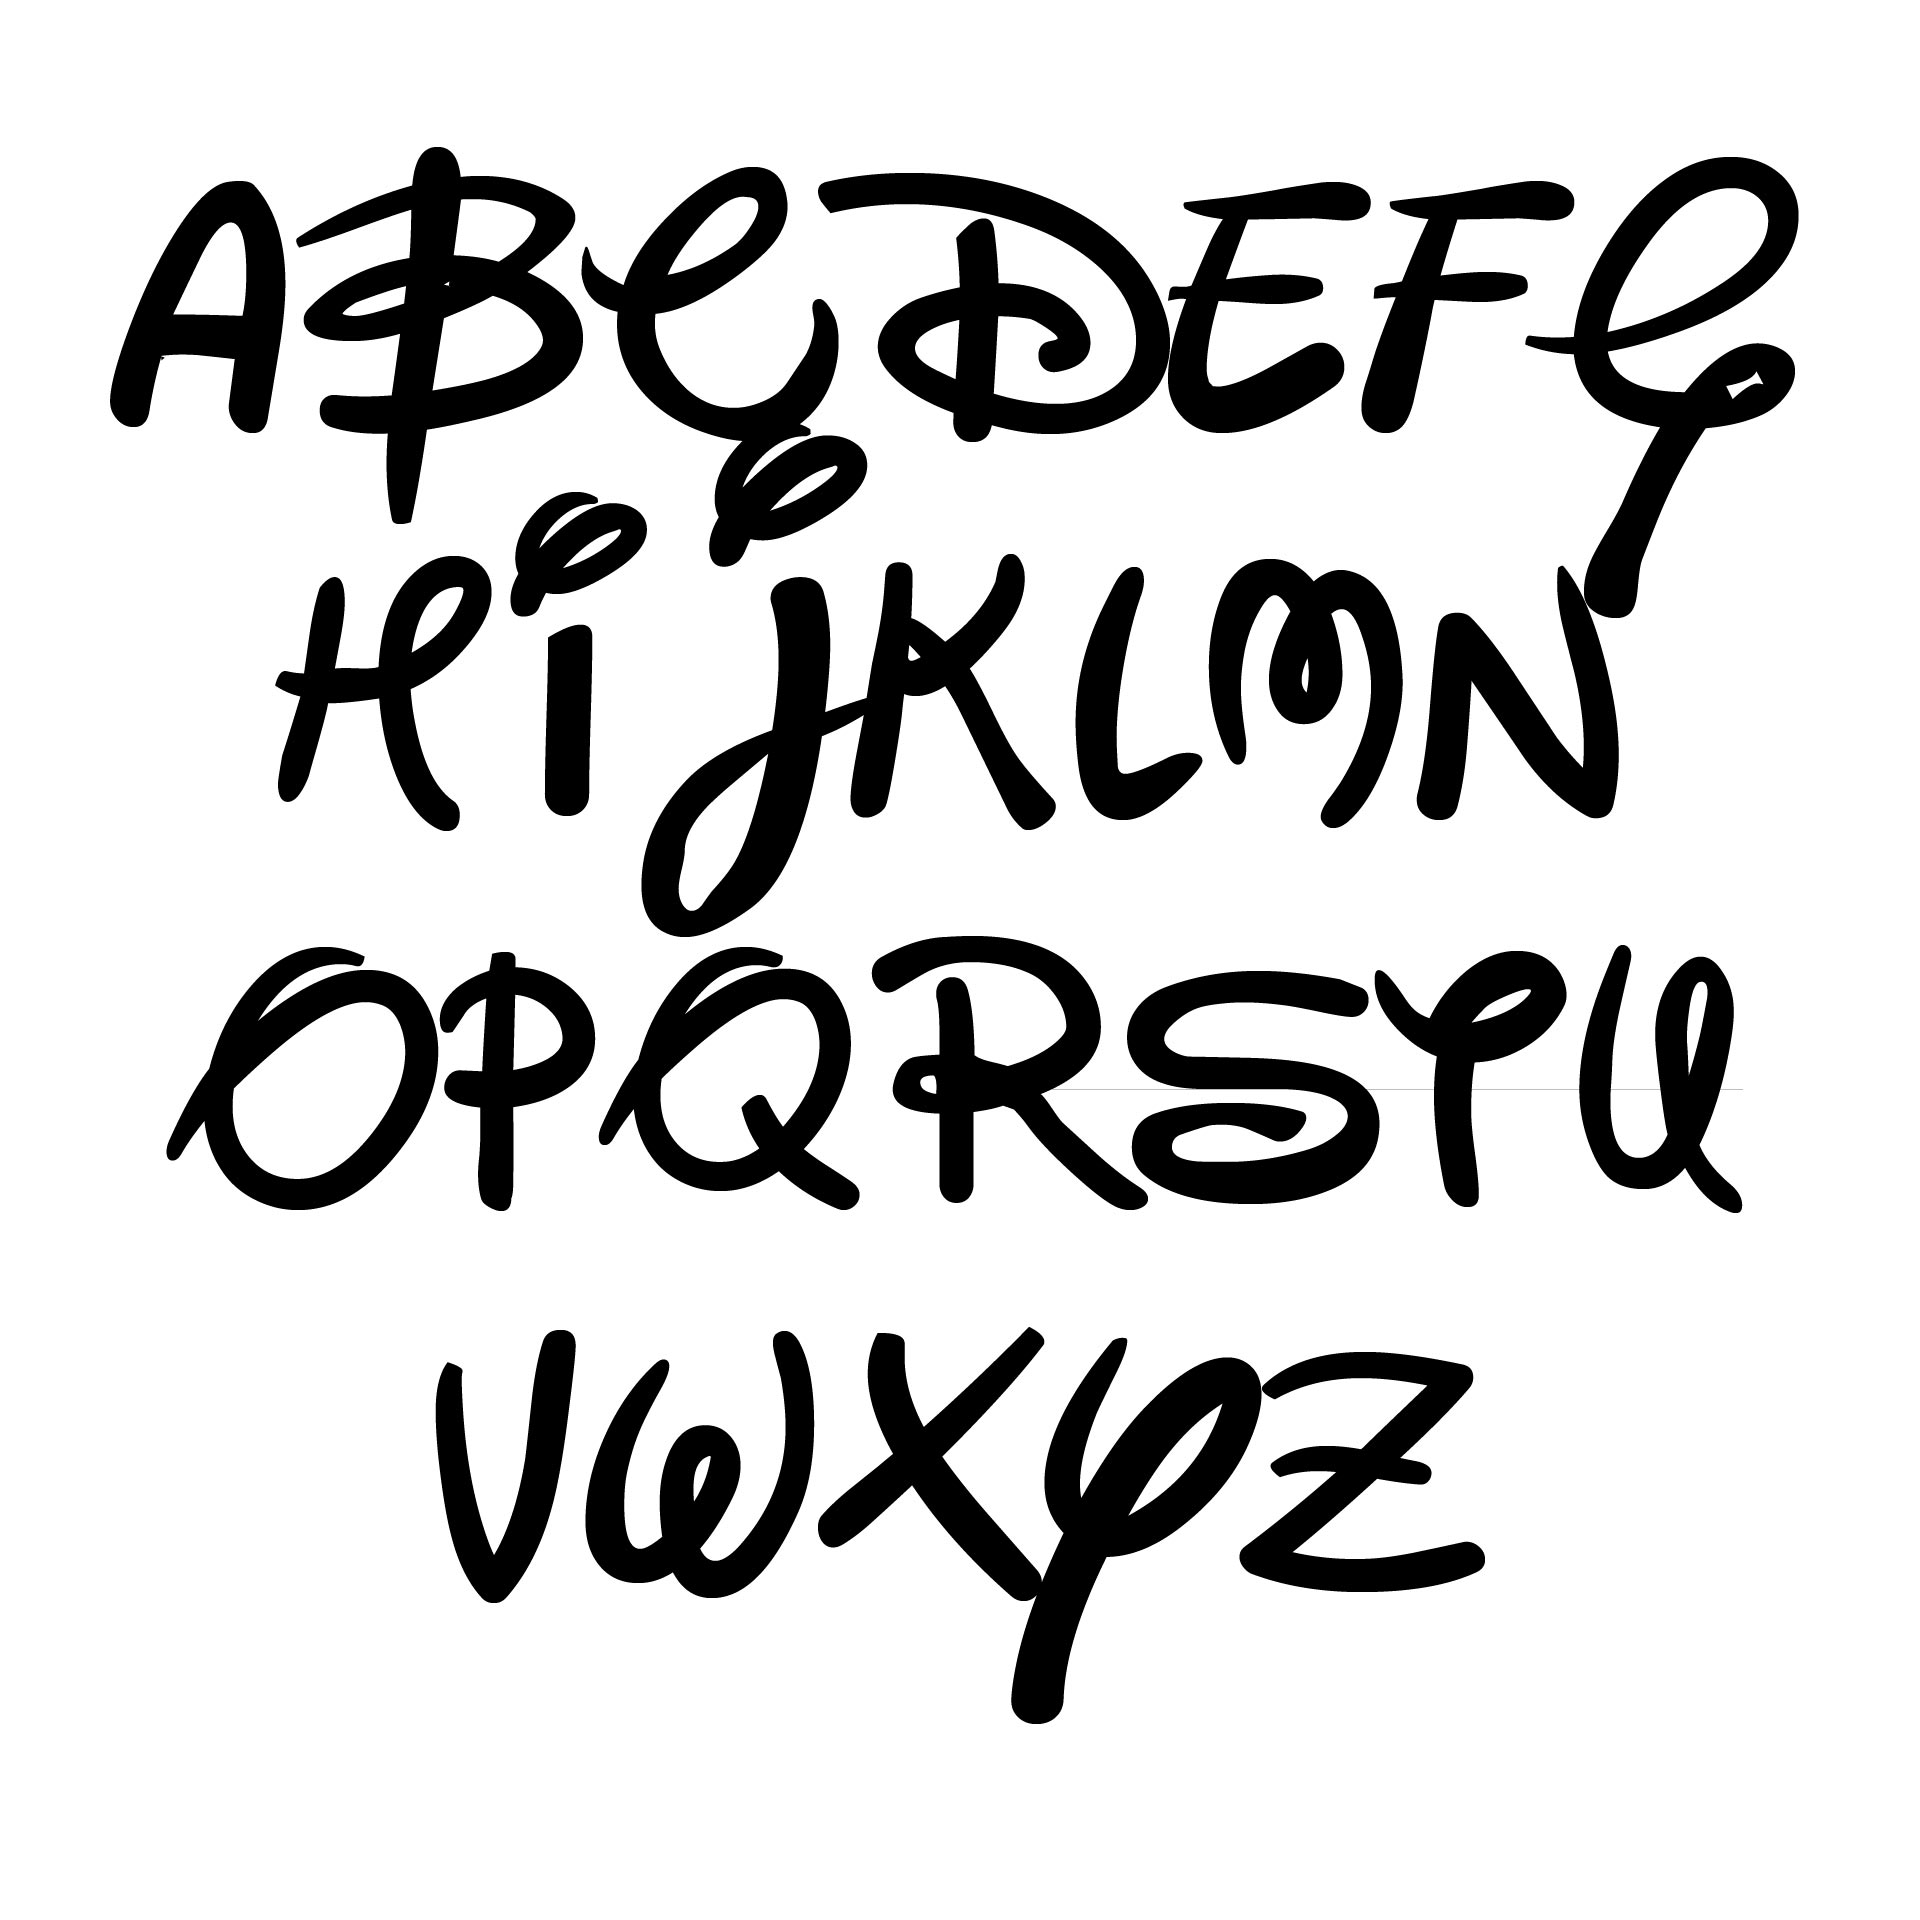 disney-alphabet-letters-printable-printable-templates